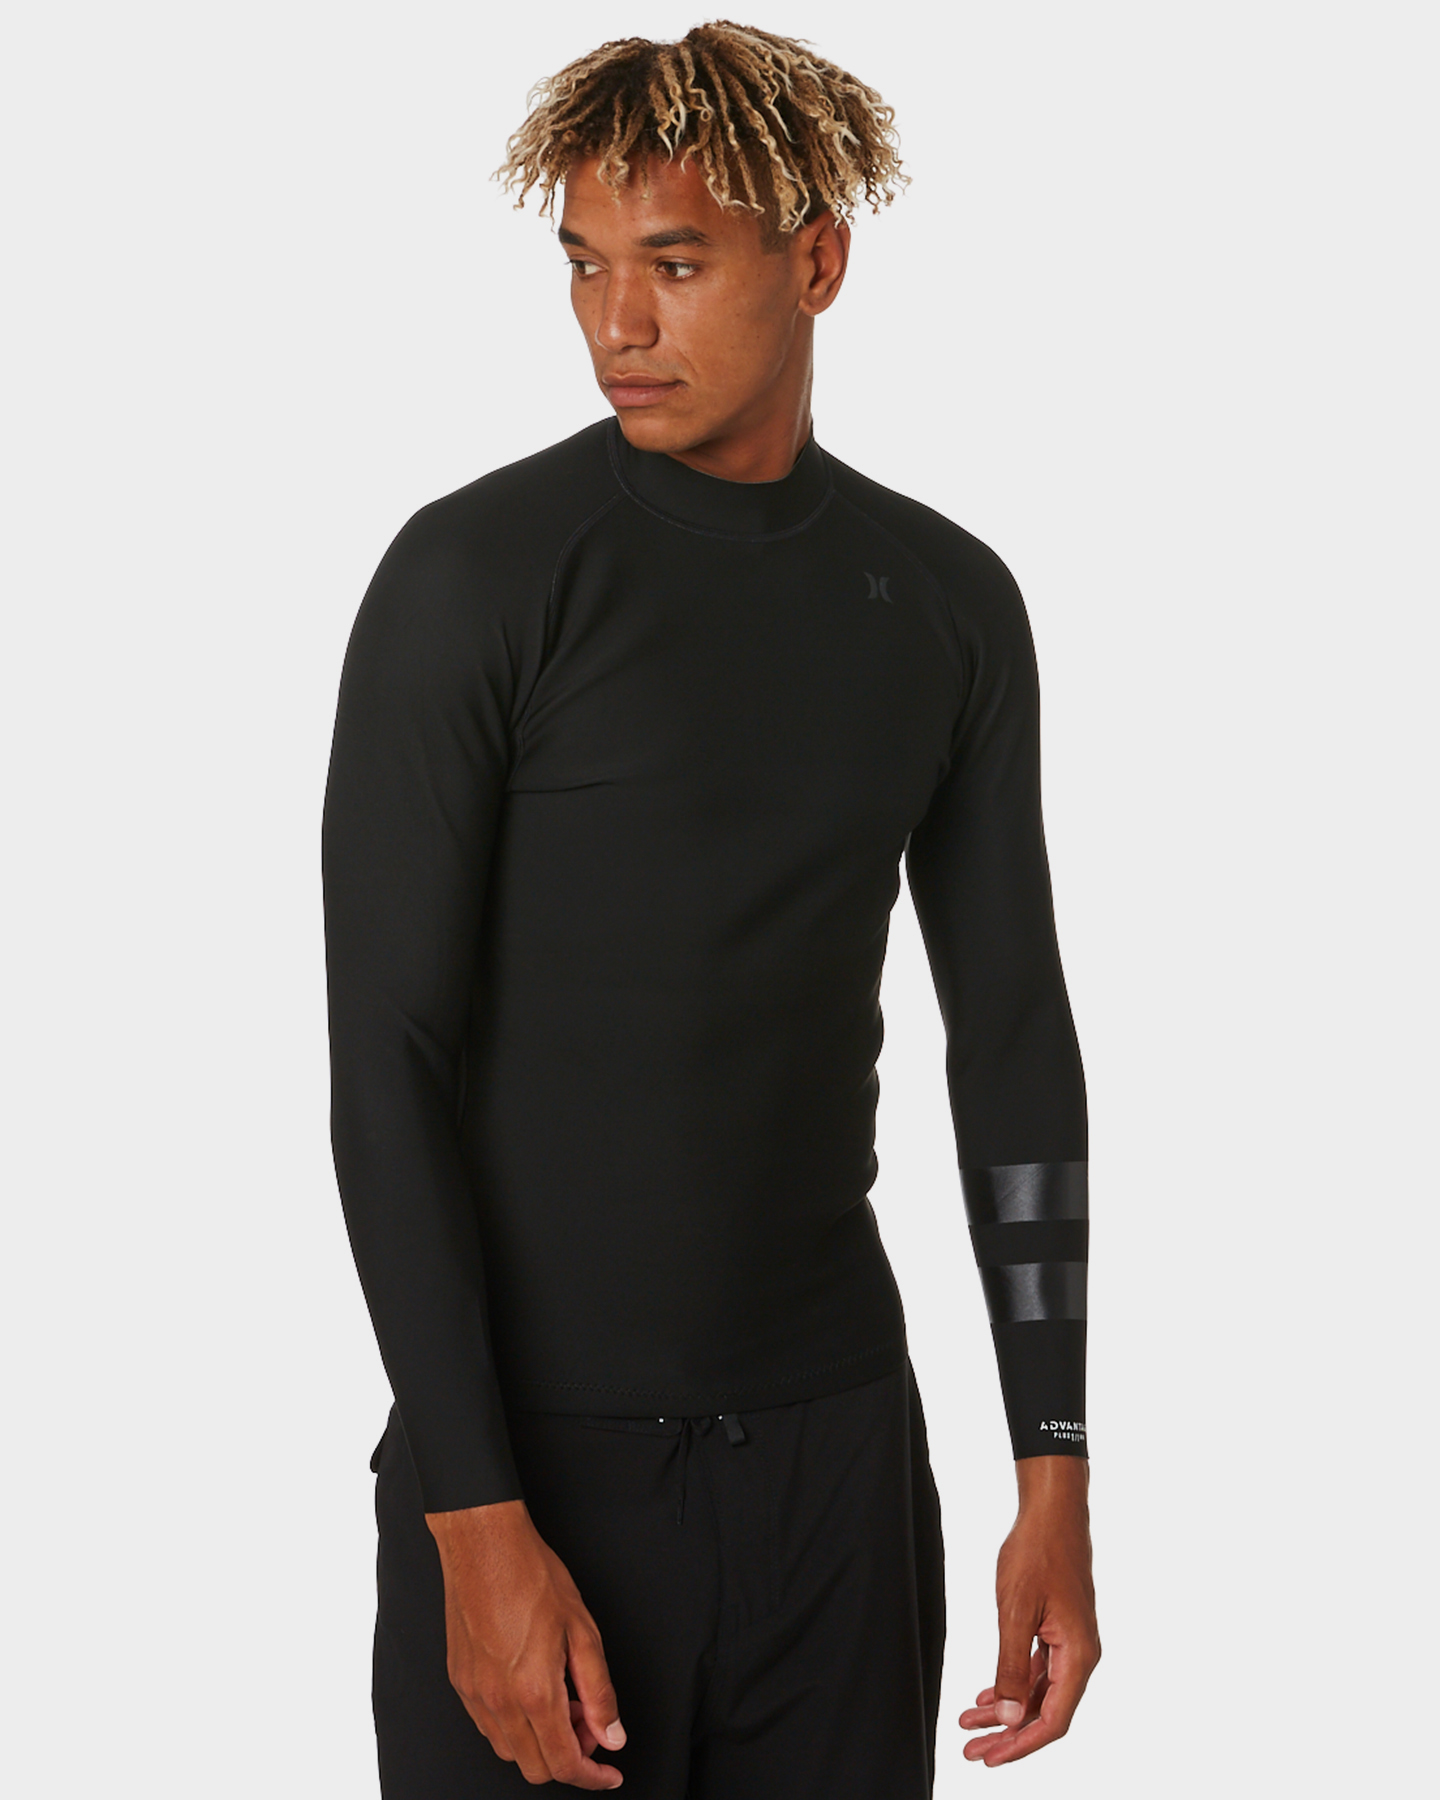 Hurley Advantage Plus 1Mm Reversible Wetsuit Jacket - Black | SurfStitch